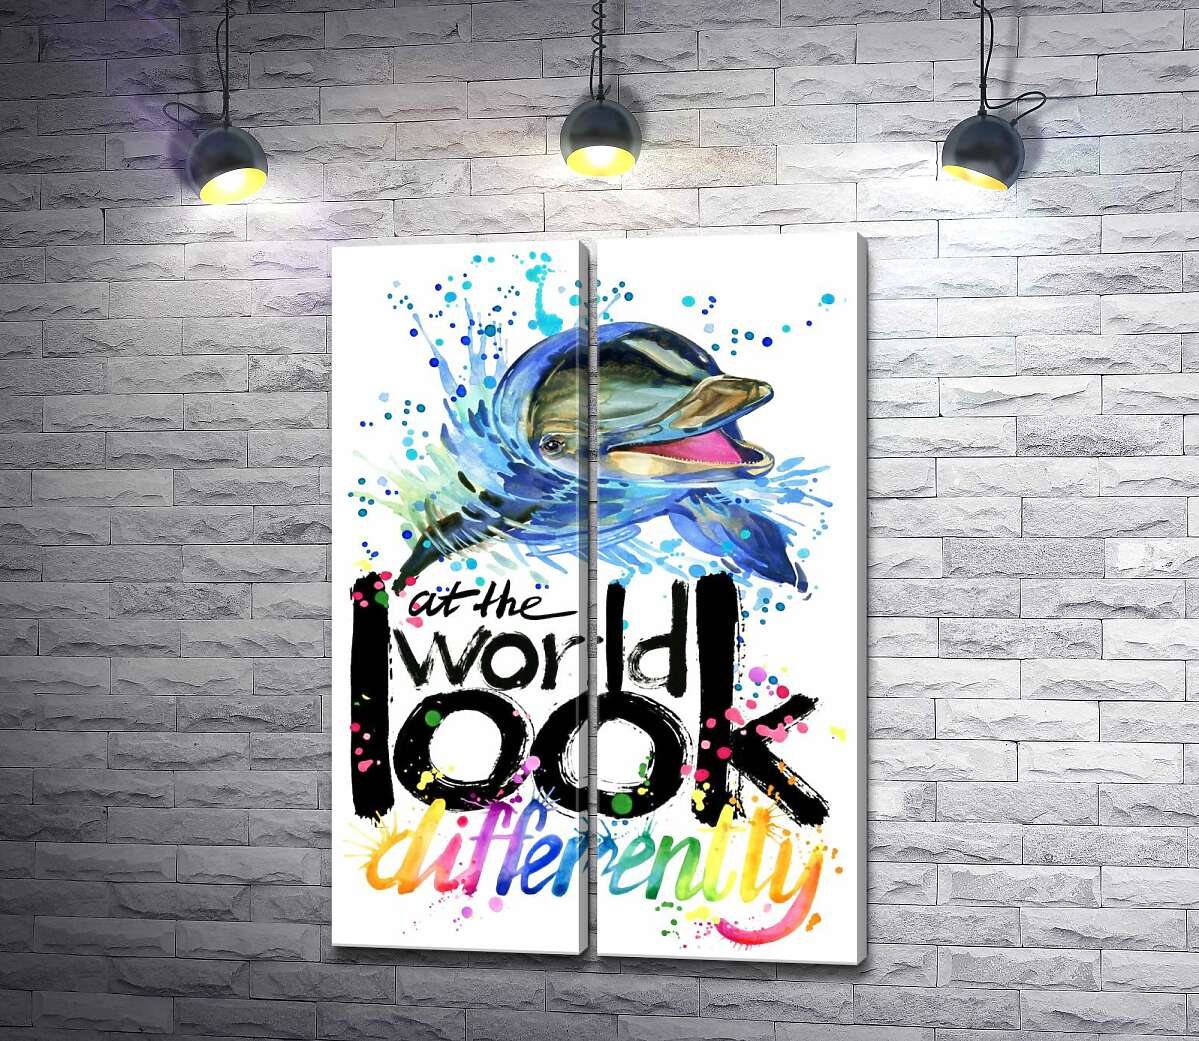 модульна картина Веселий дельфін з написом "look at the world differently"